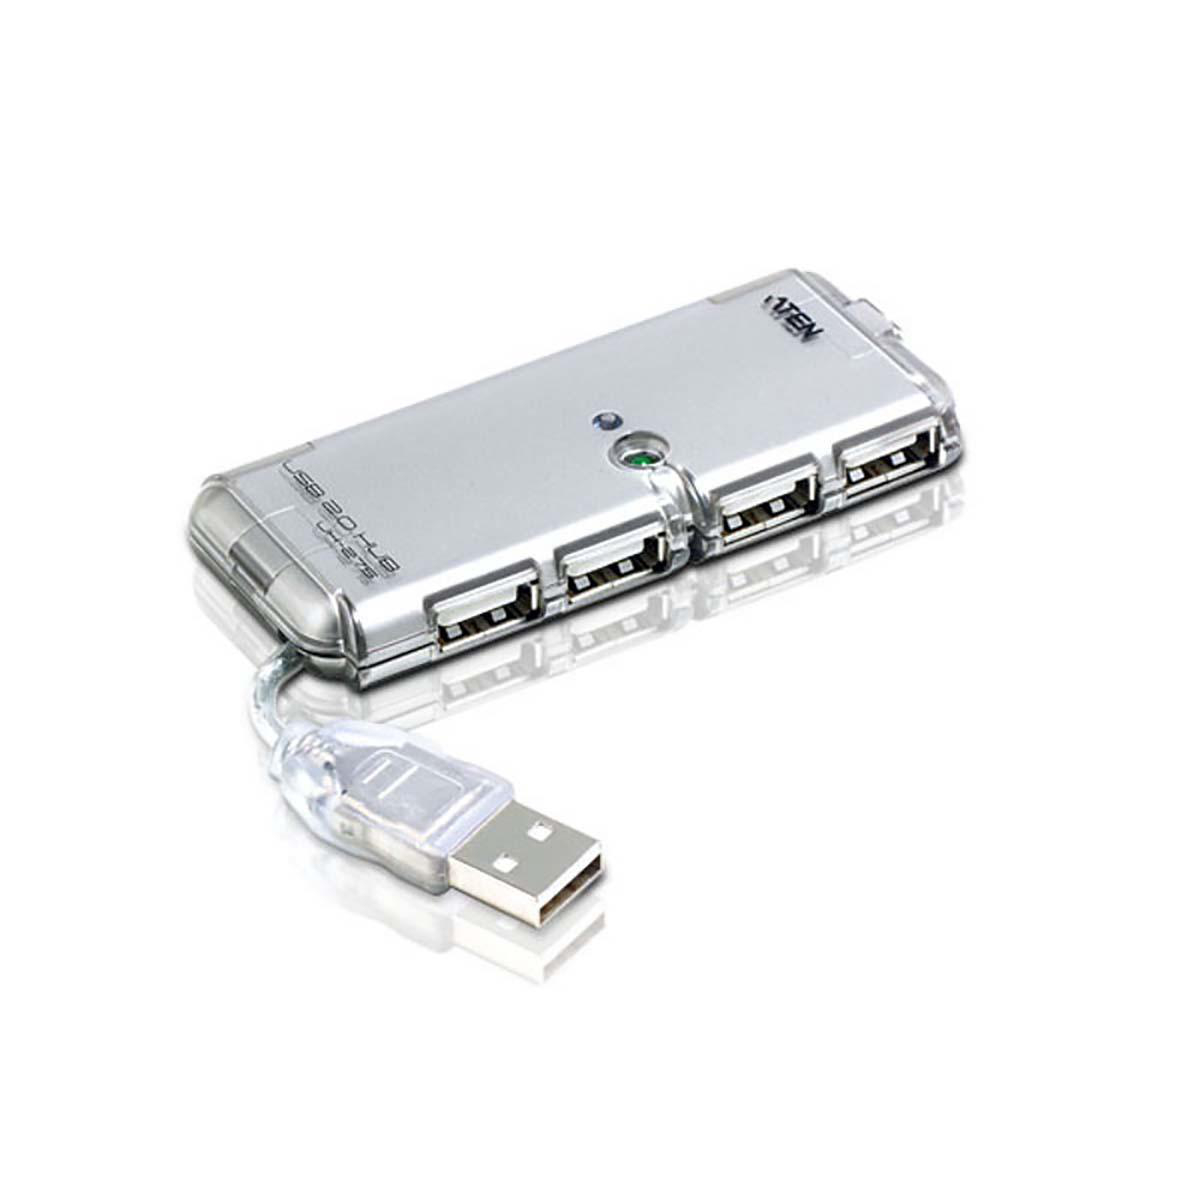 4-Port USB 2.0 HUB (including supply)